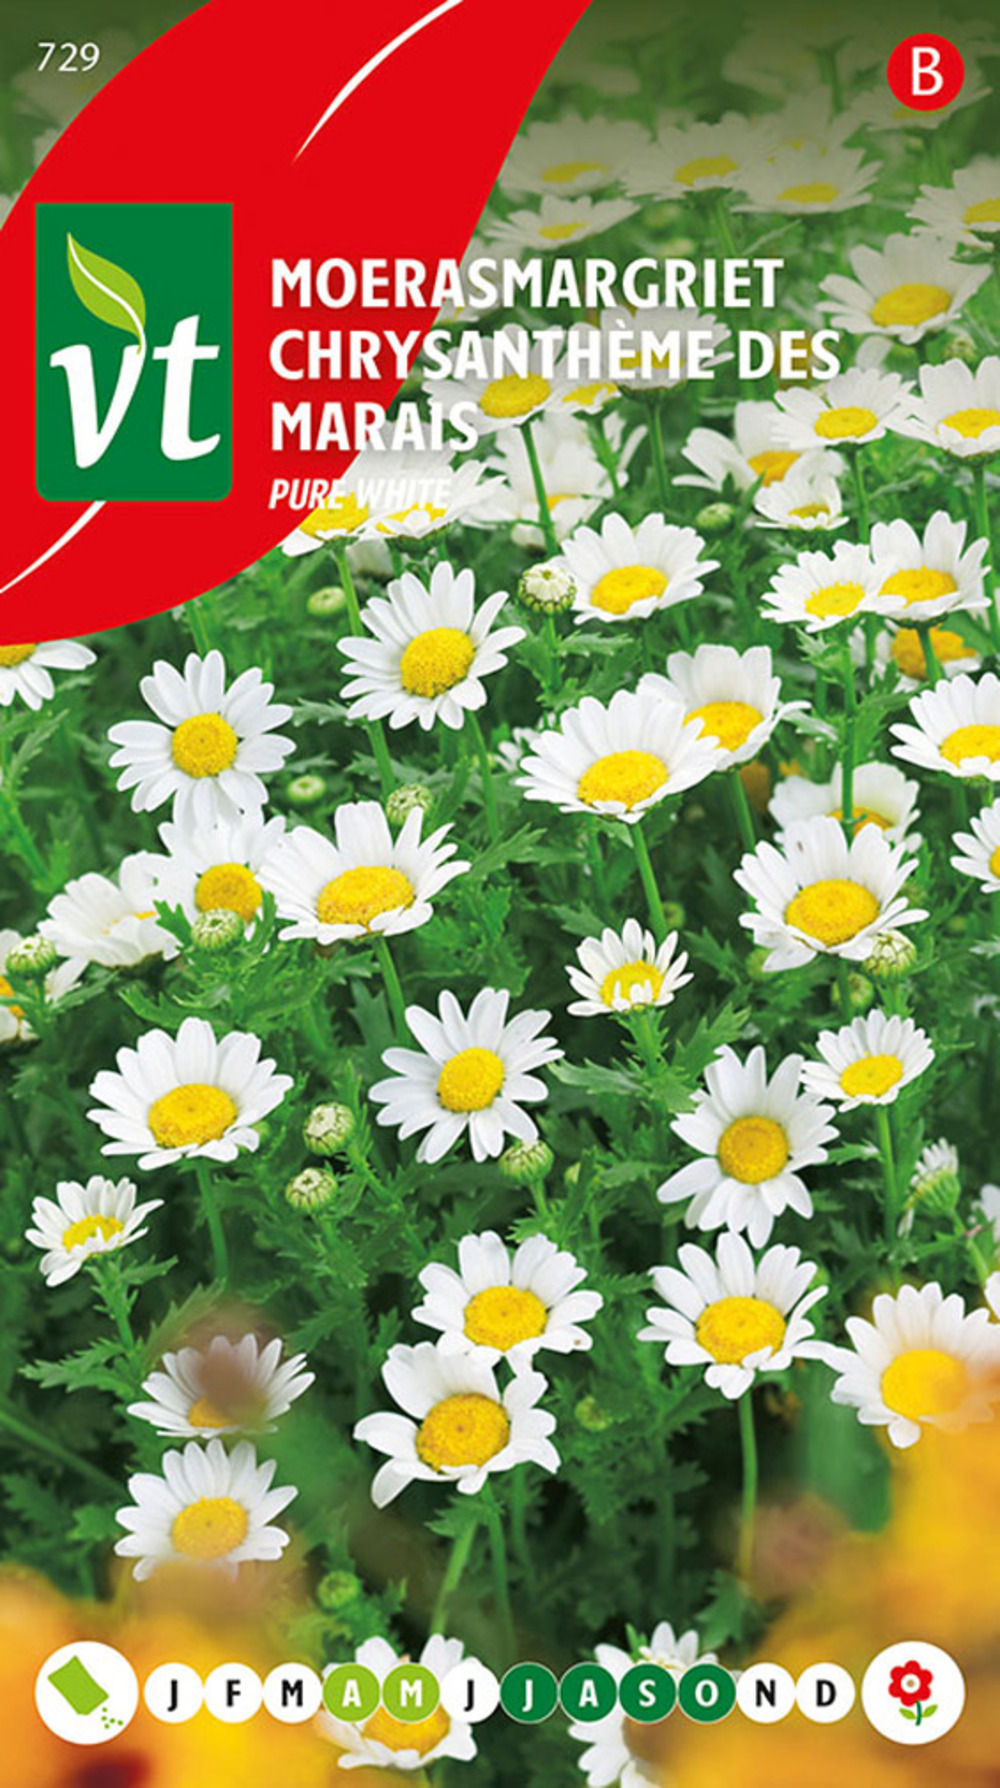 Chrysantheme des marais pure white - ca. 0,5 gr